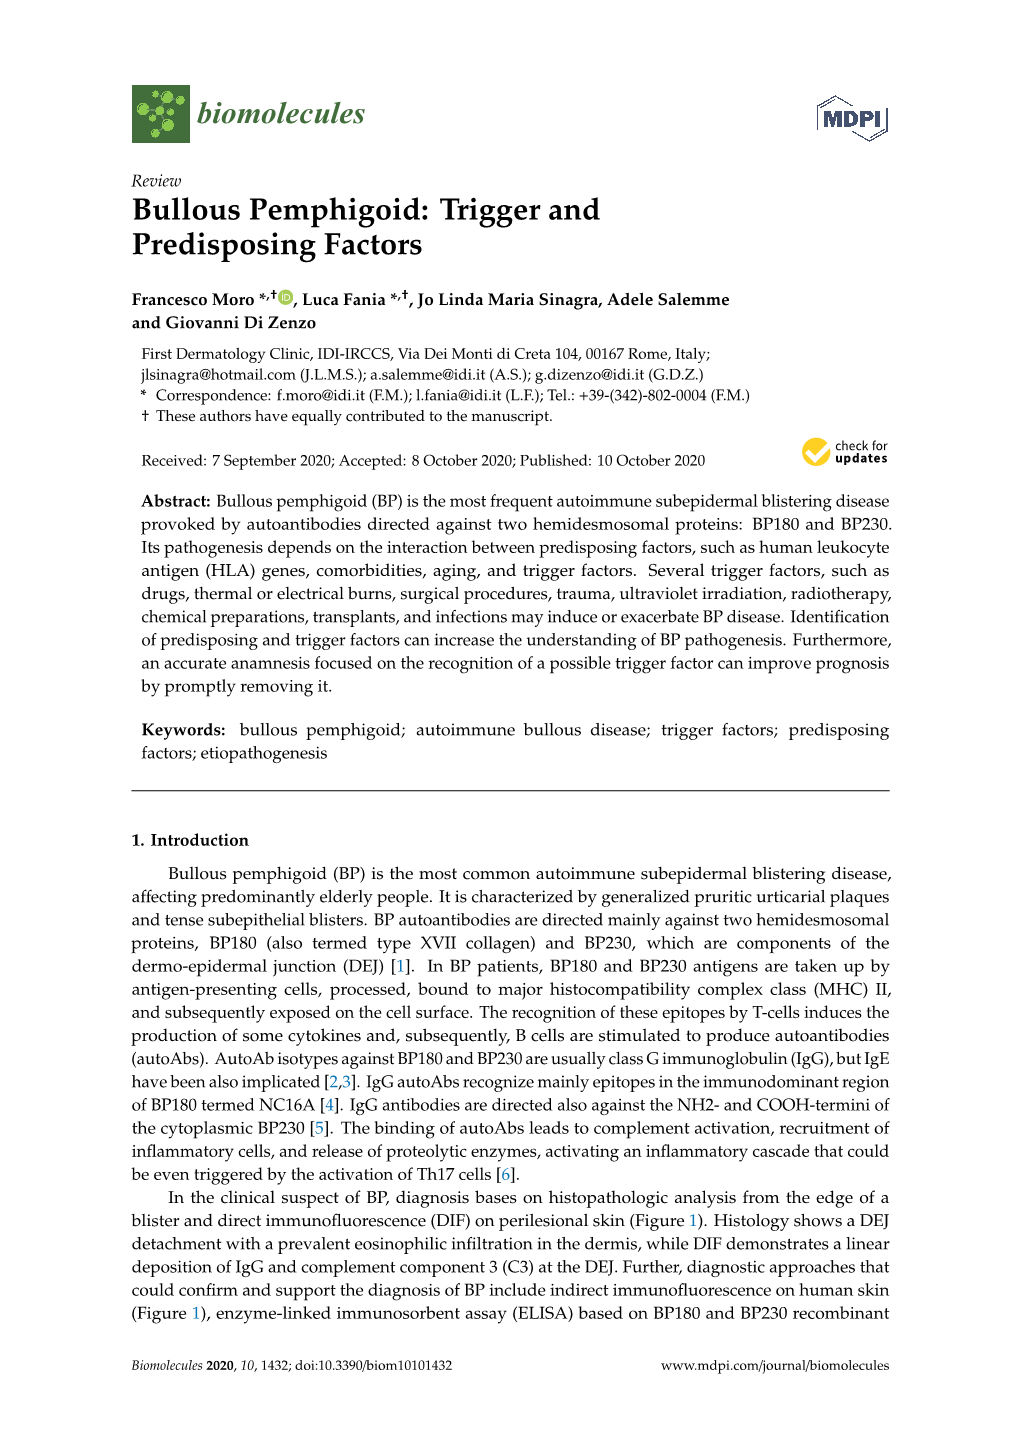 Bullous Pemphigoid: Trigger and Predisposing Factors